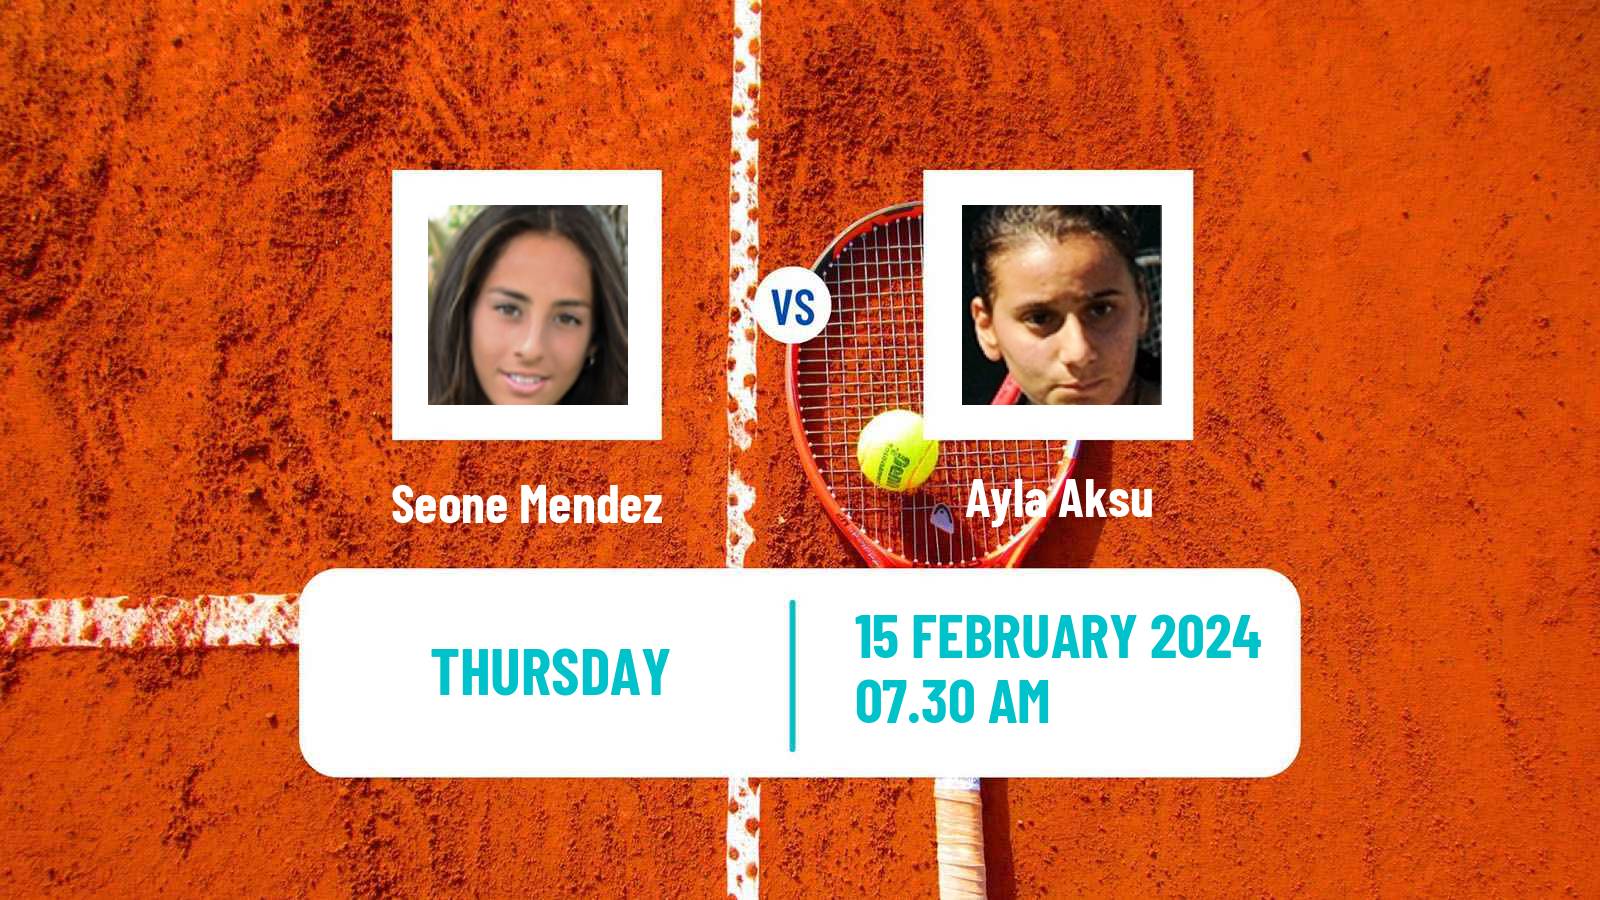 Tennis ITF W35 Antalya 3 Women Seone Mendez - Ayla Aksu